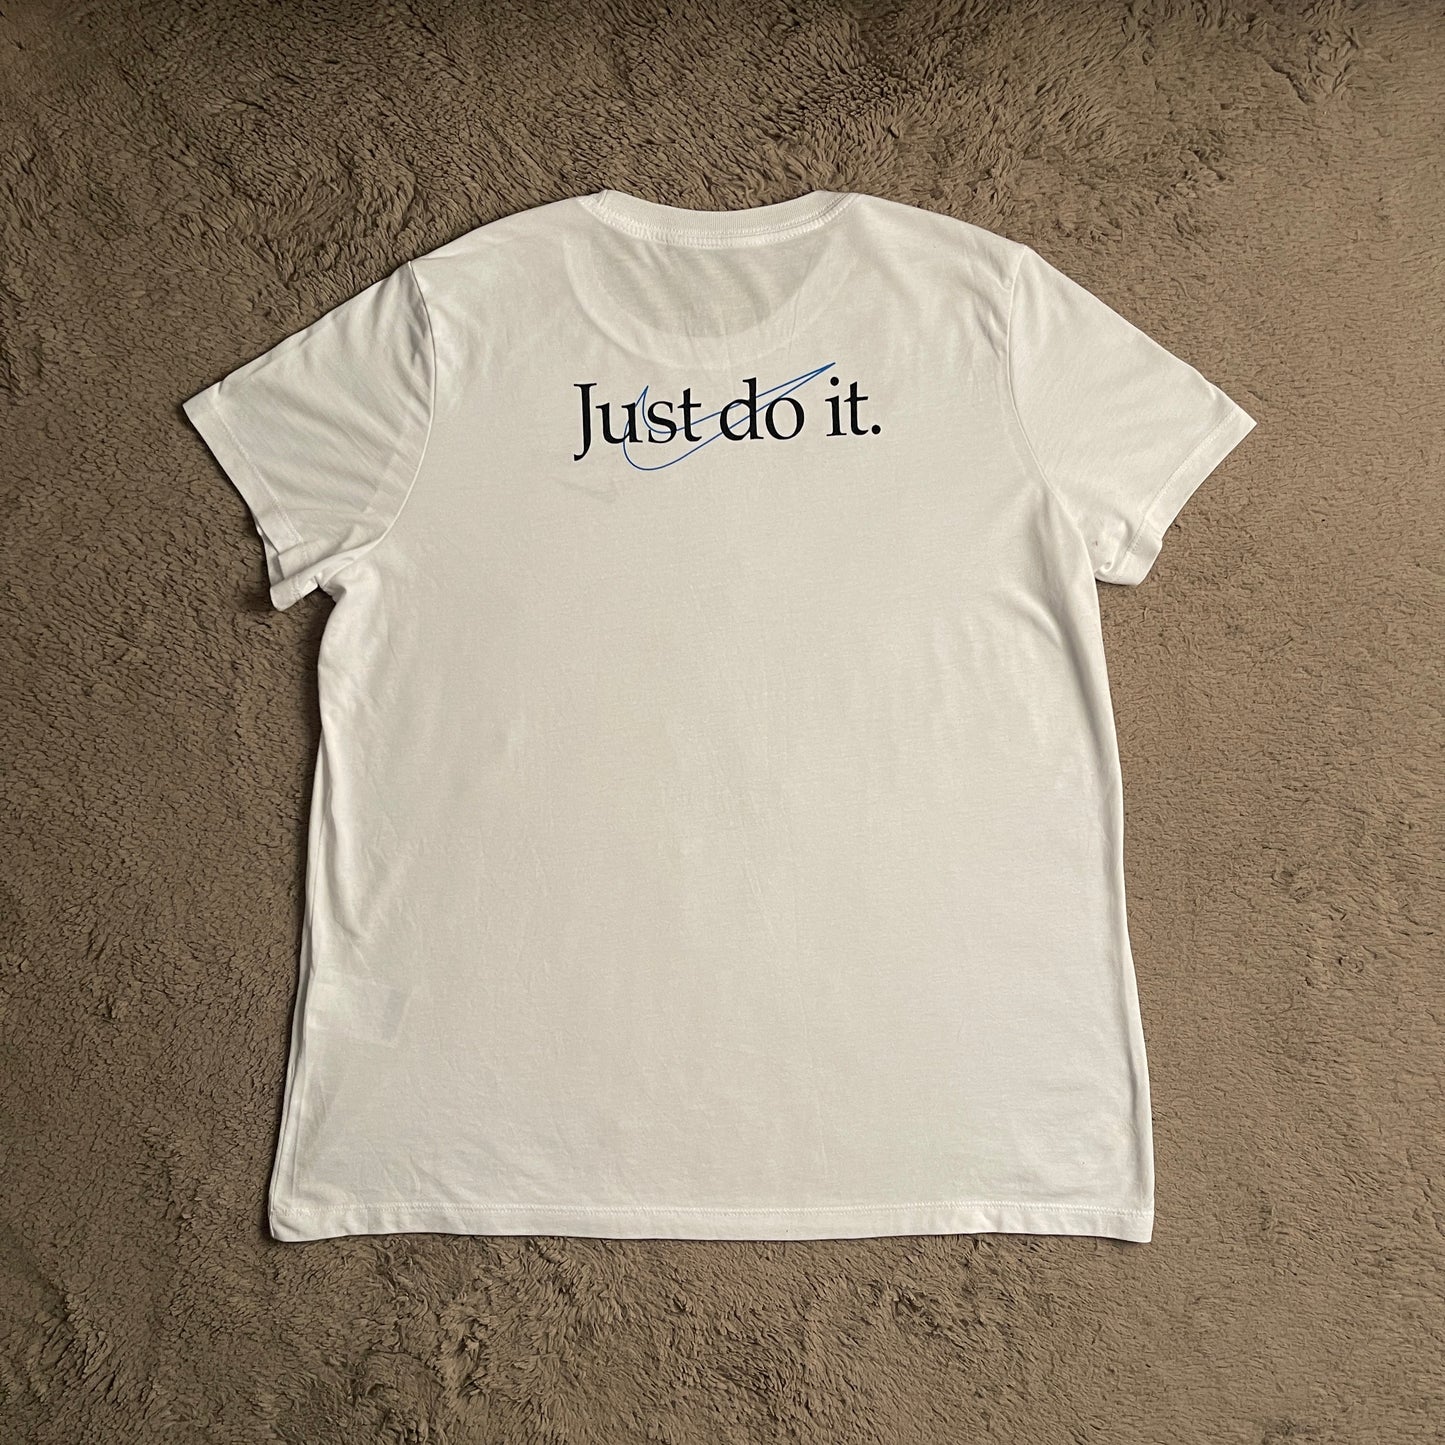 Nike "Just do it." Basic Tee (M)